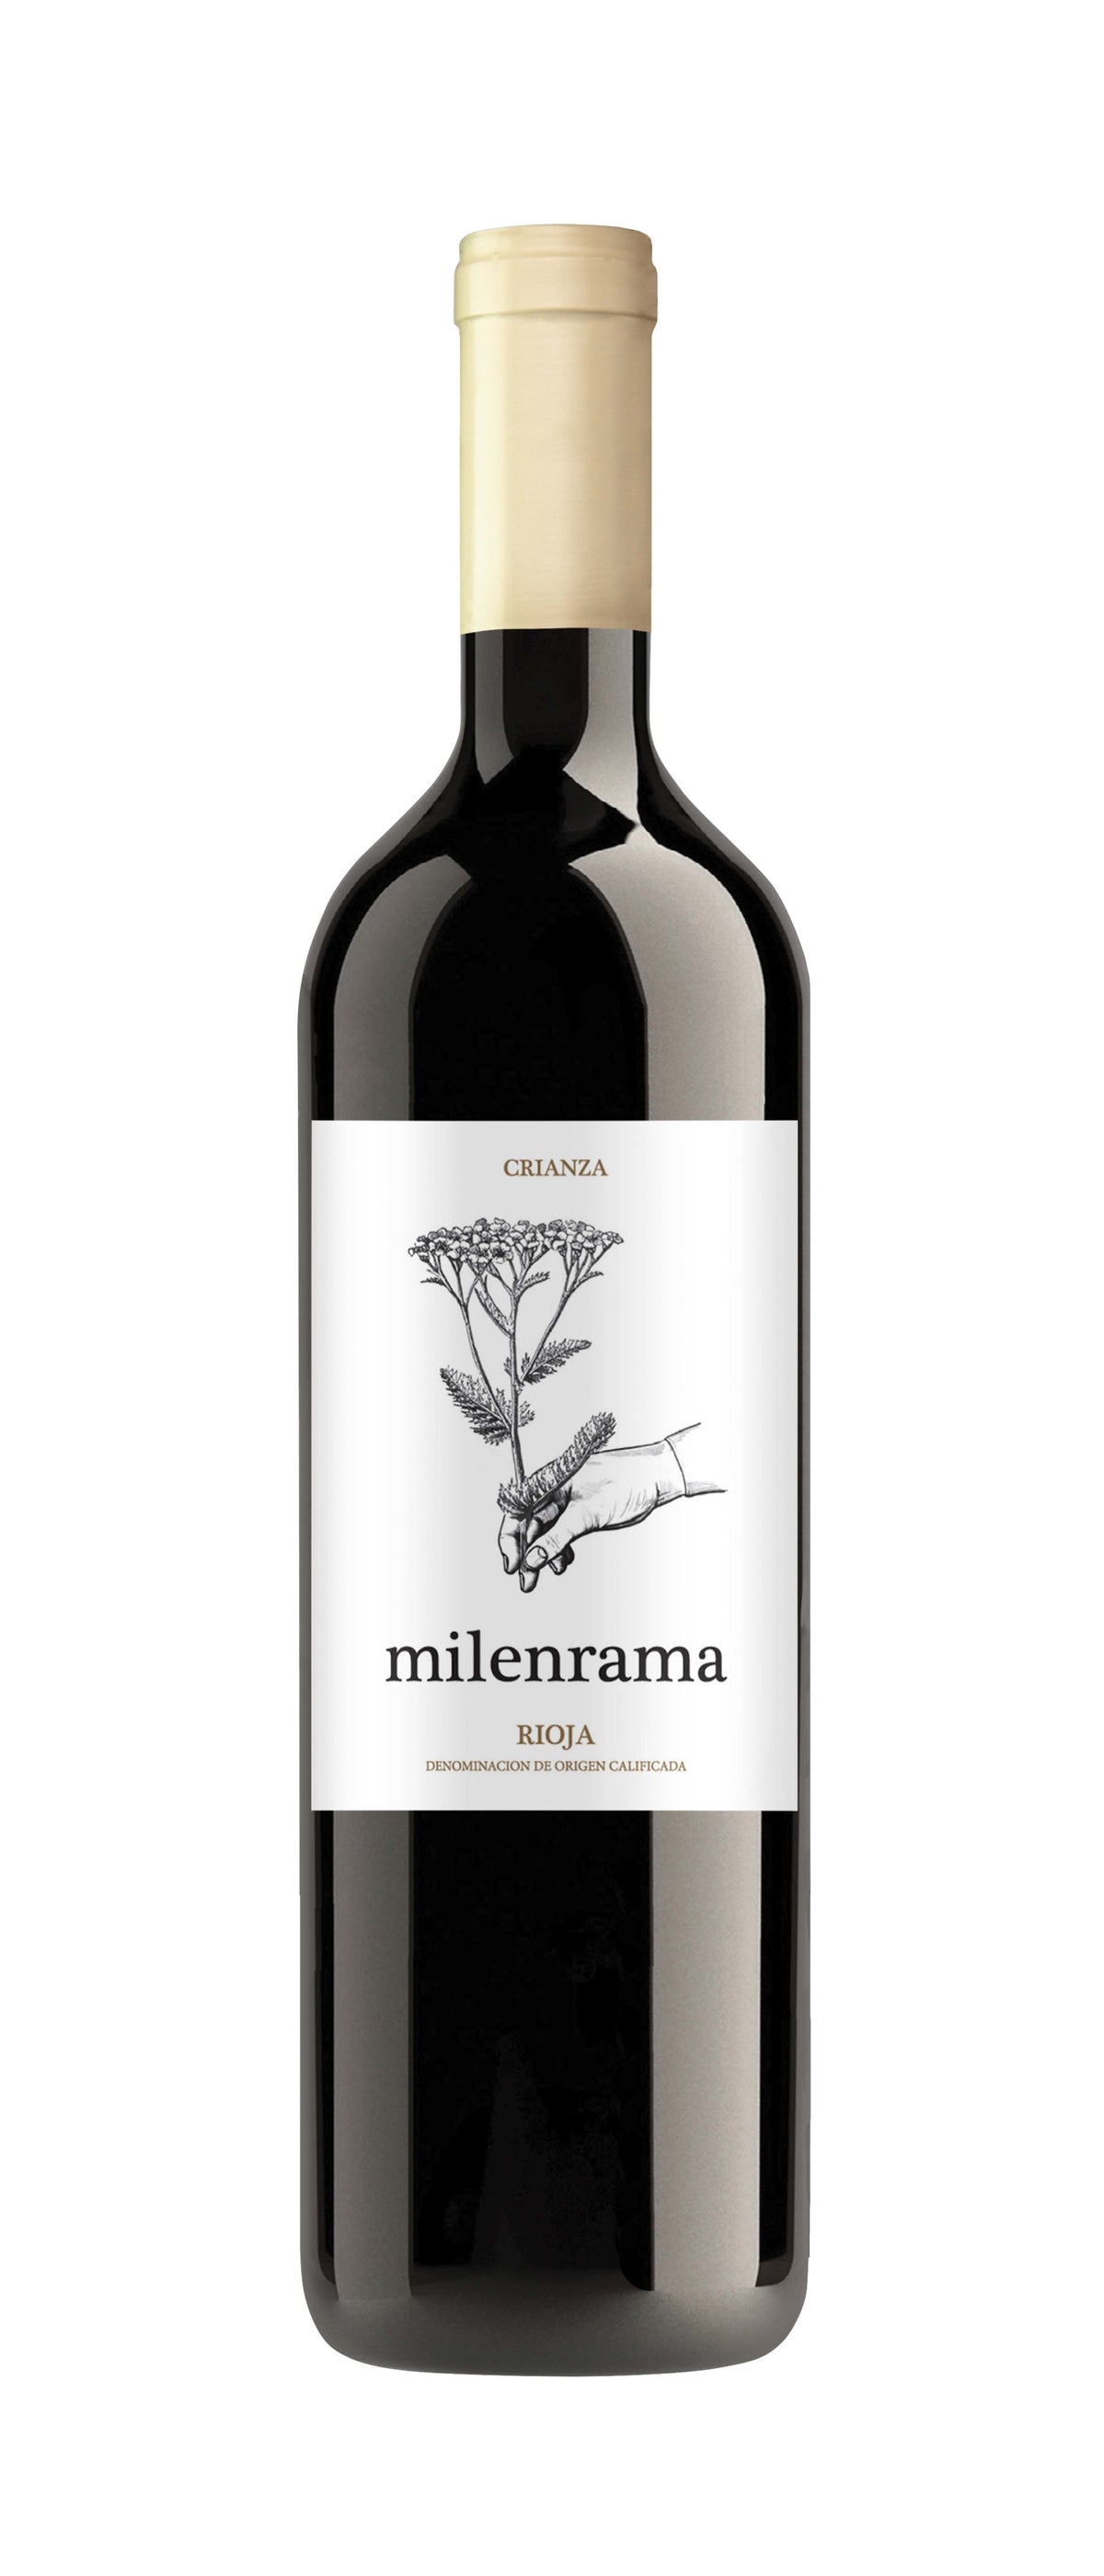 Milenrama Rioja Crianza, Milenrama 2018